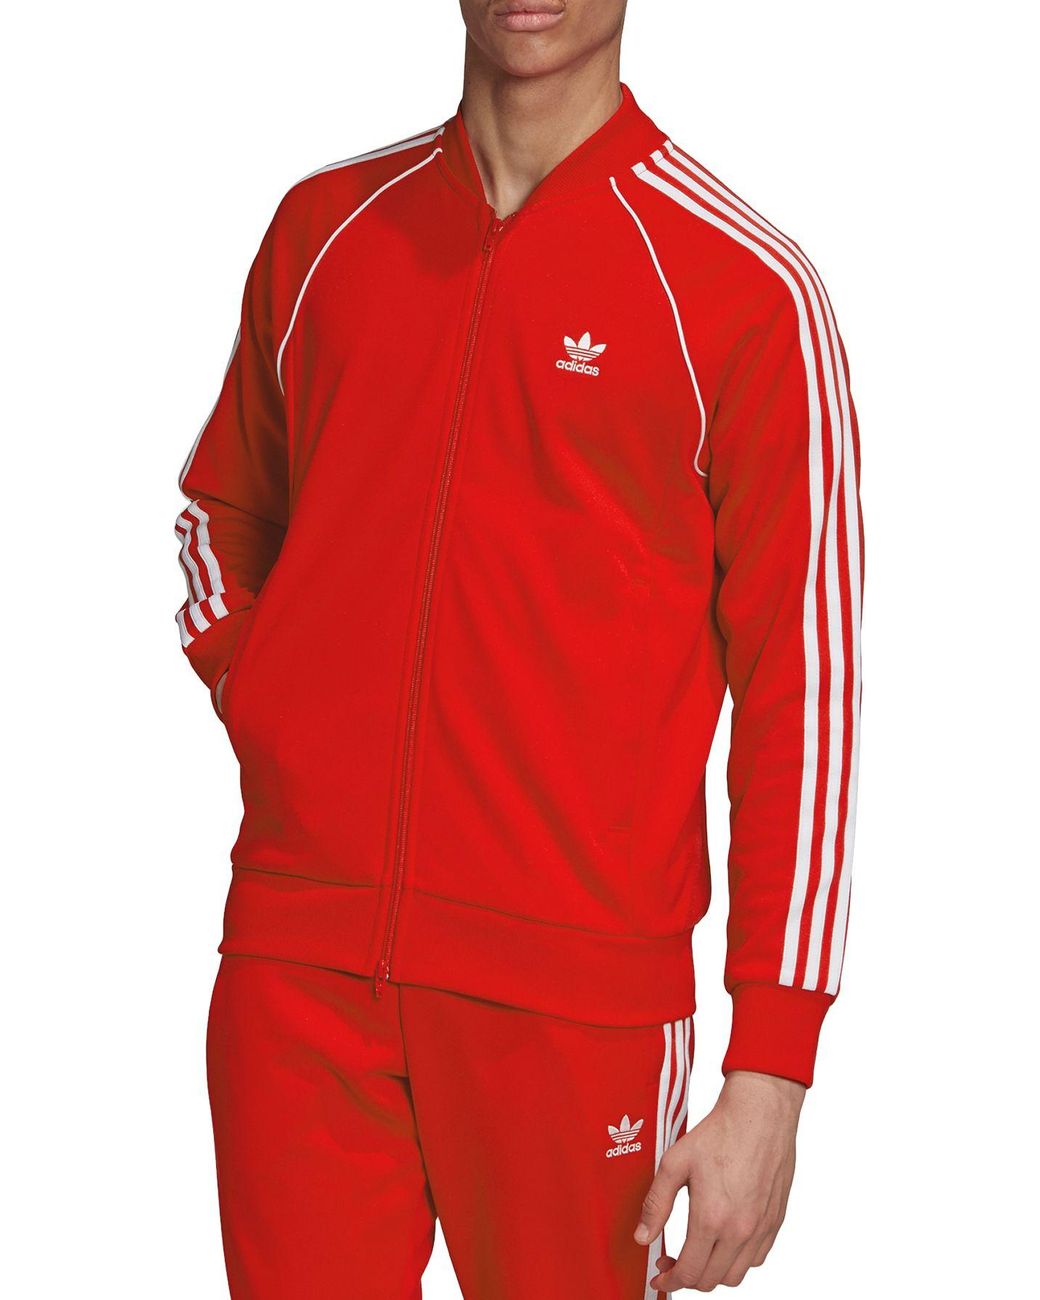 adidas Originals Superstar Track Jacket in Red for Men - Lyst